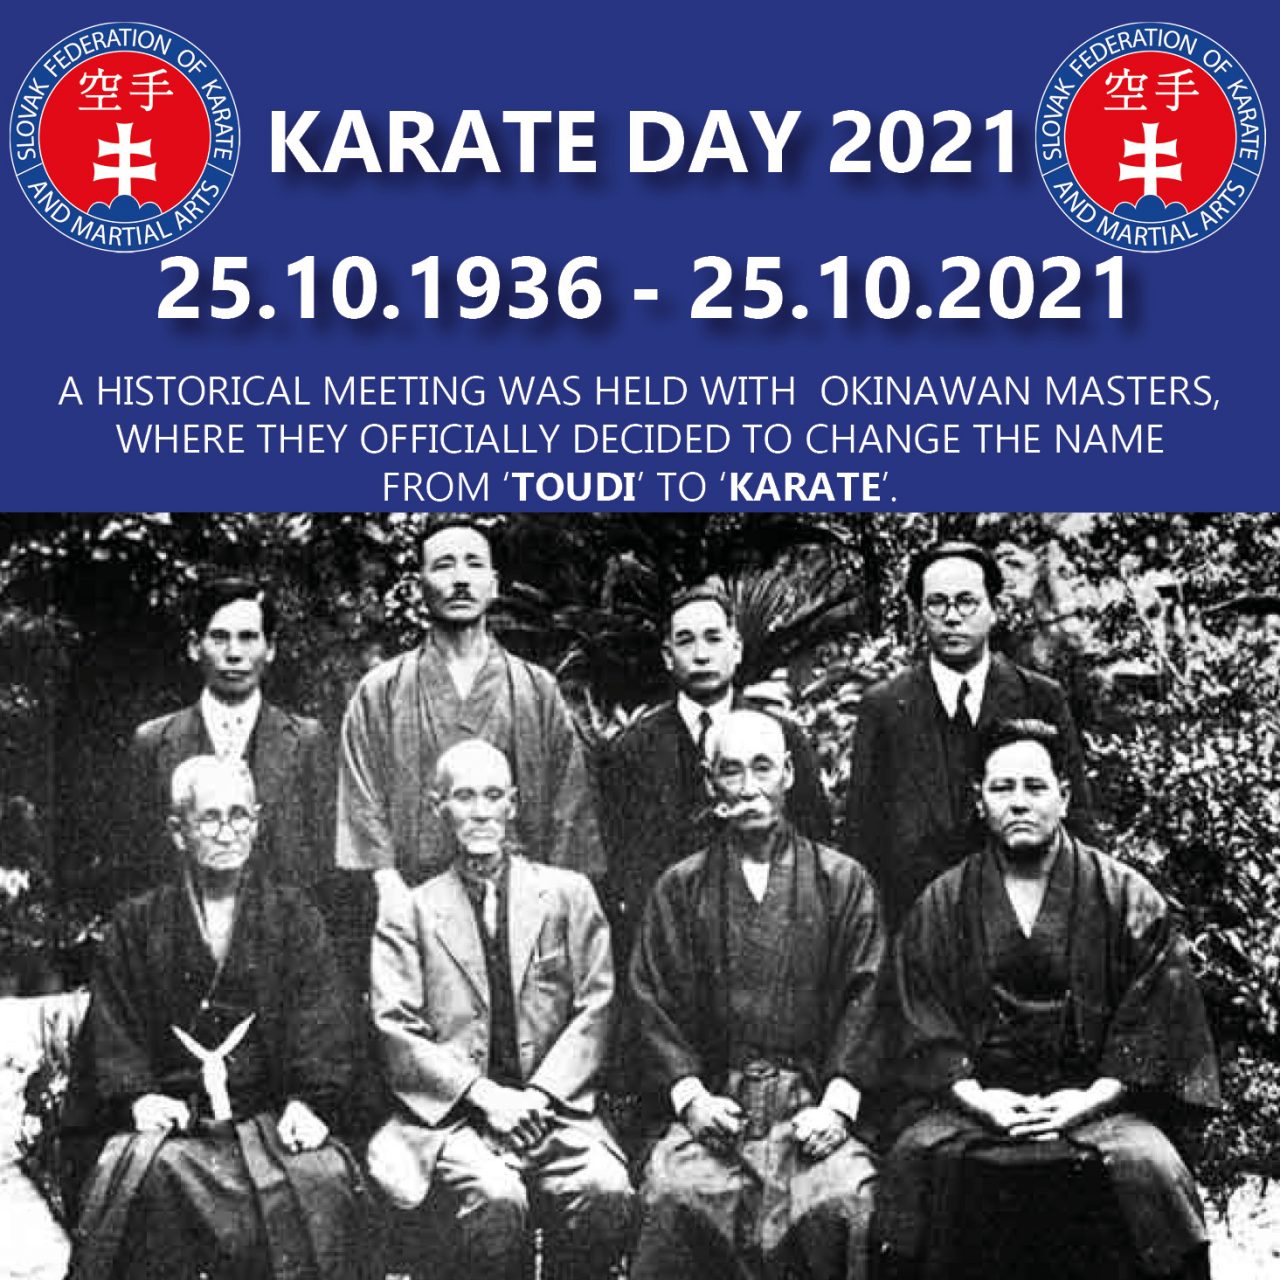 https://karate-slovakia.sk/wp-content/uploads/karate-day-2021-1280x1280.jpg